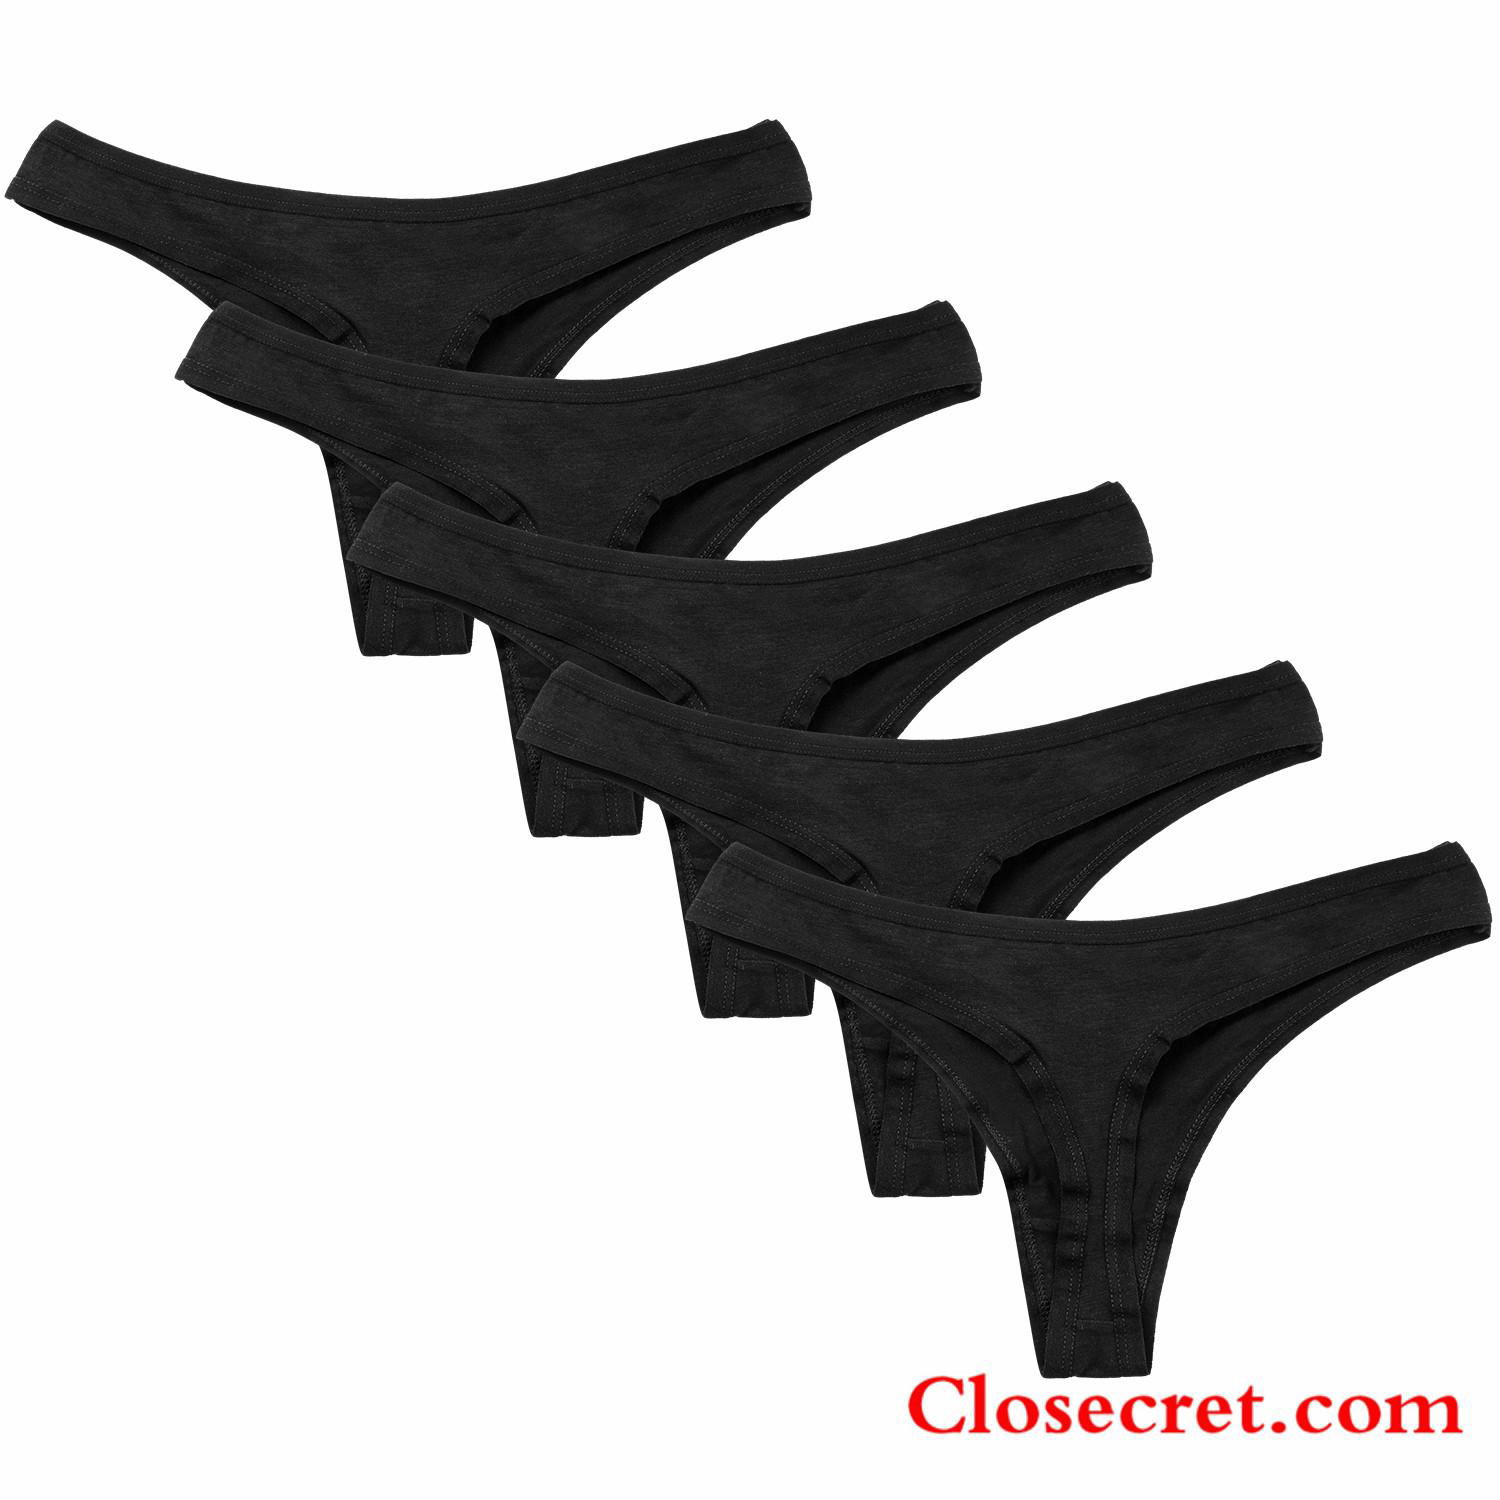 Closecret Women’s Black Panties Cotton Thongs Pack of 5pcs G-strings